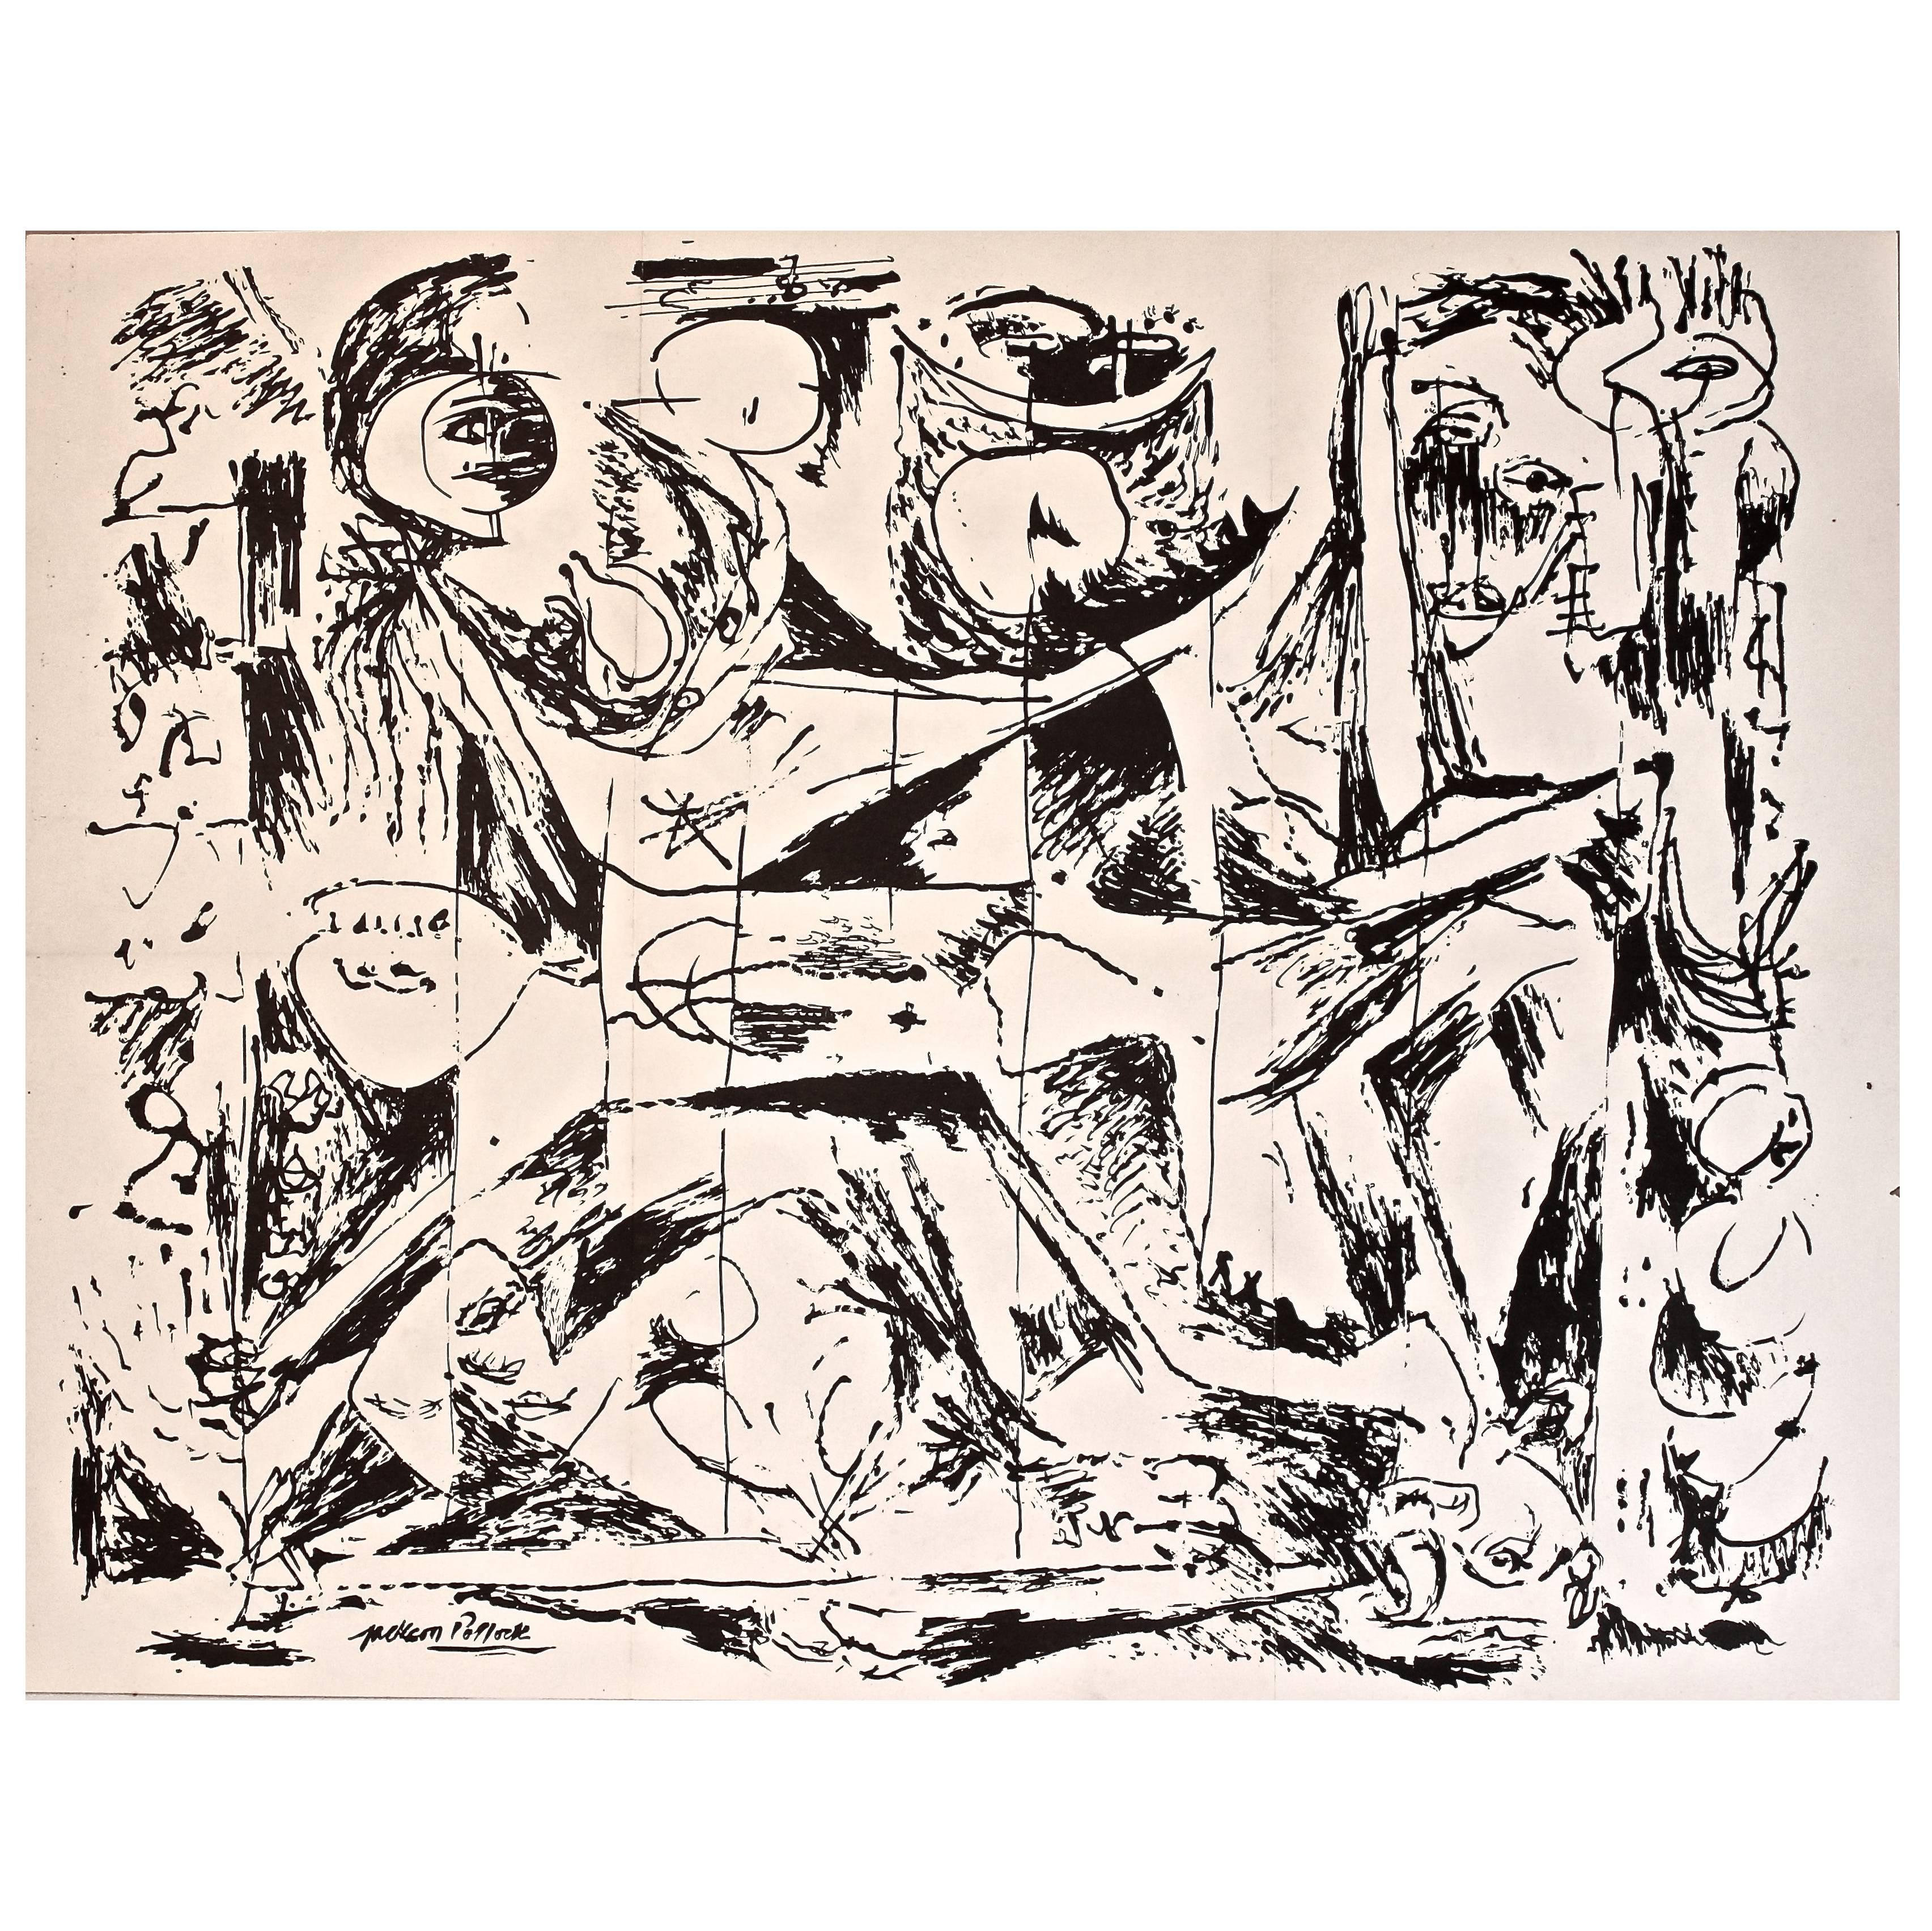 Jackson Pollock Original Betty Parsons Gallery 1951 Announcement and Invitation